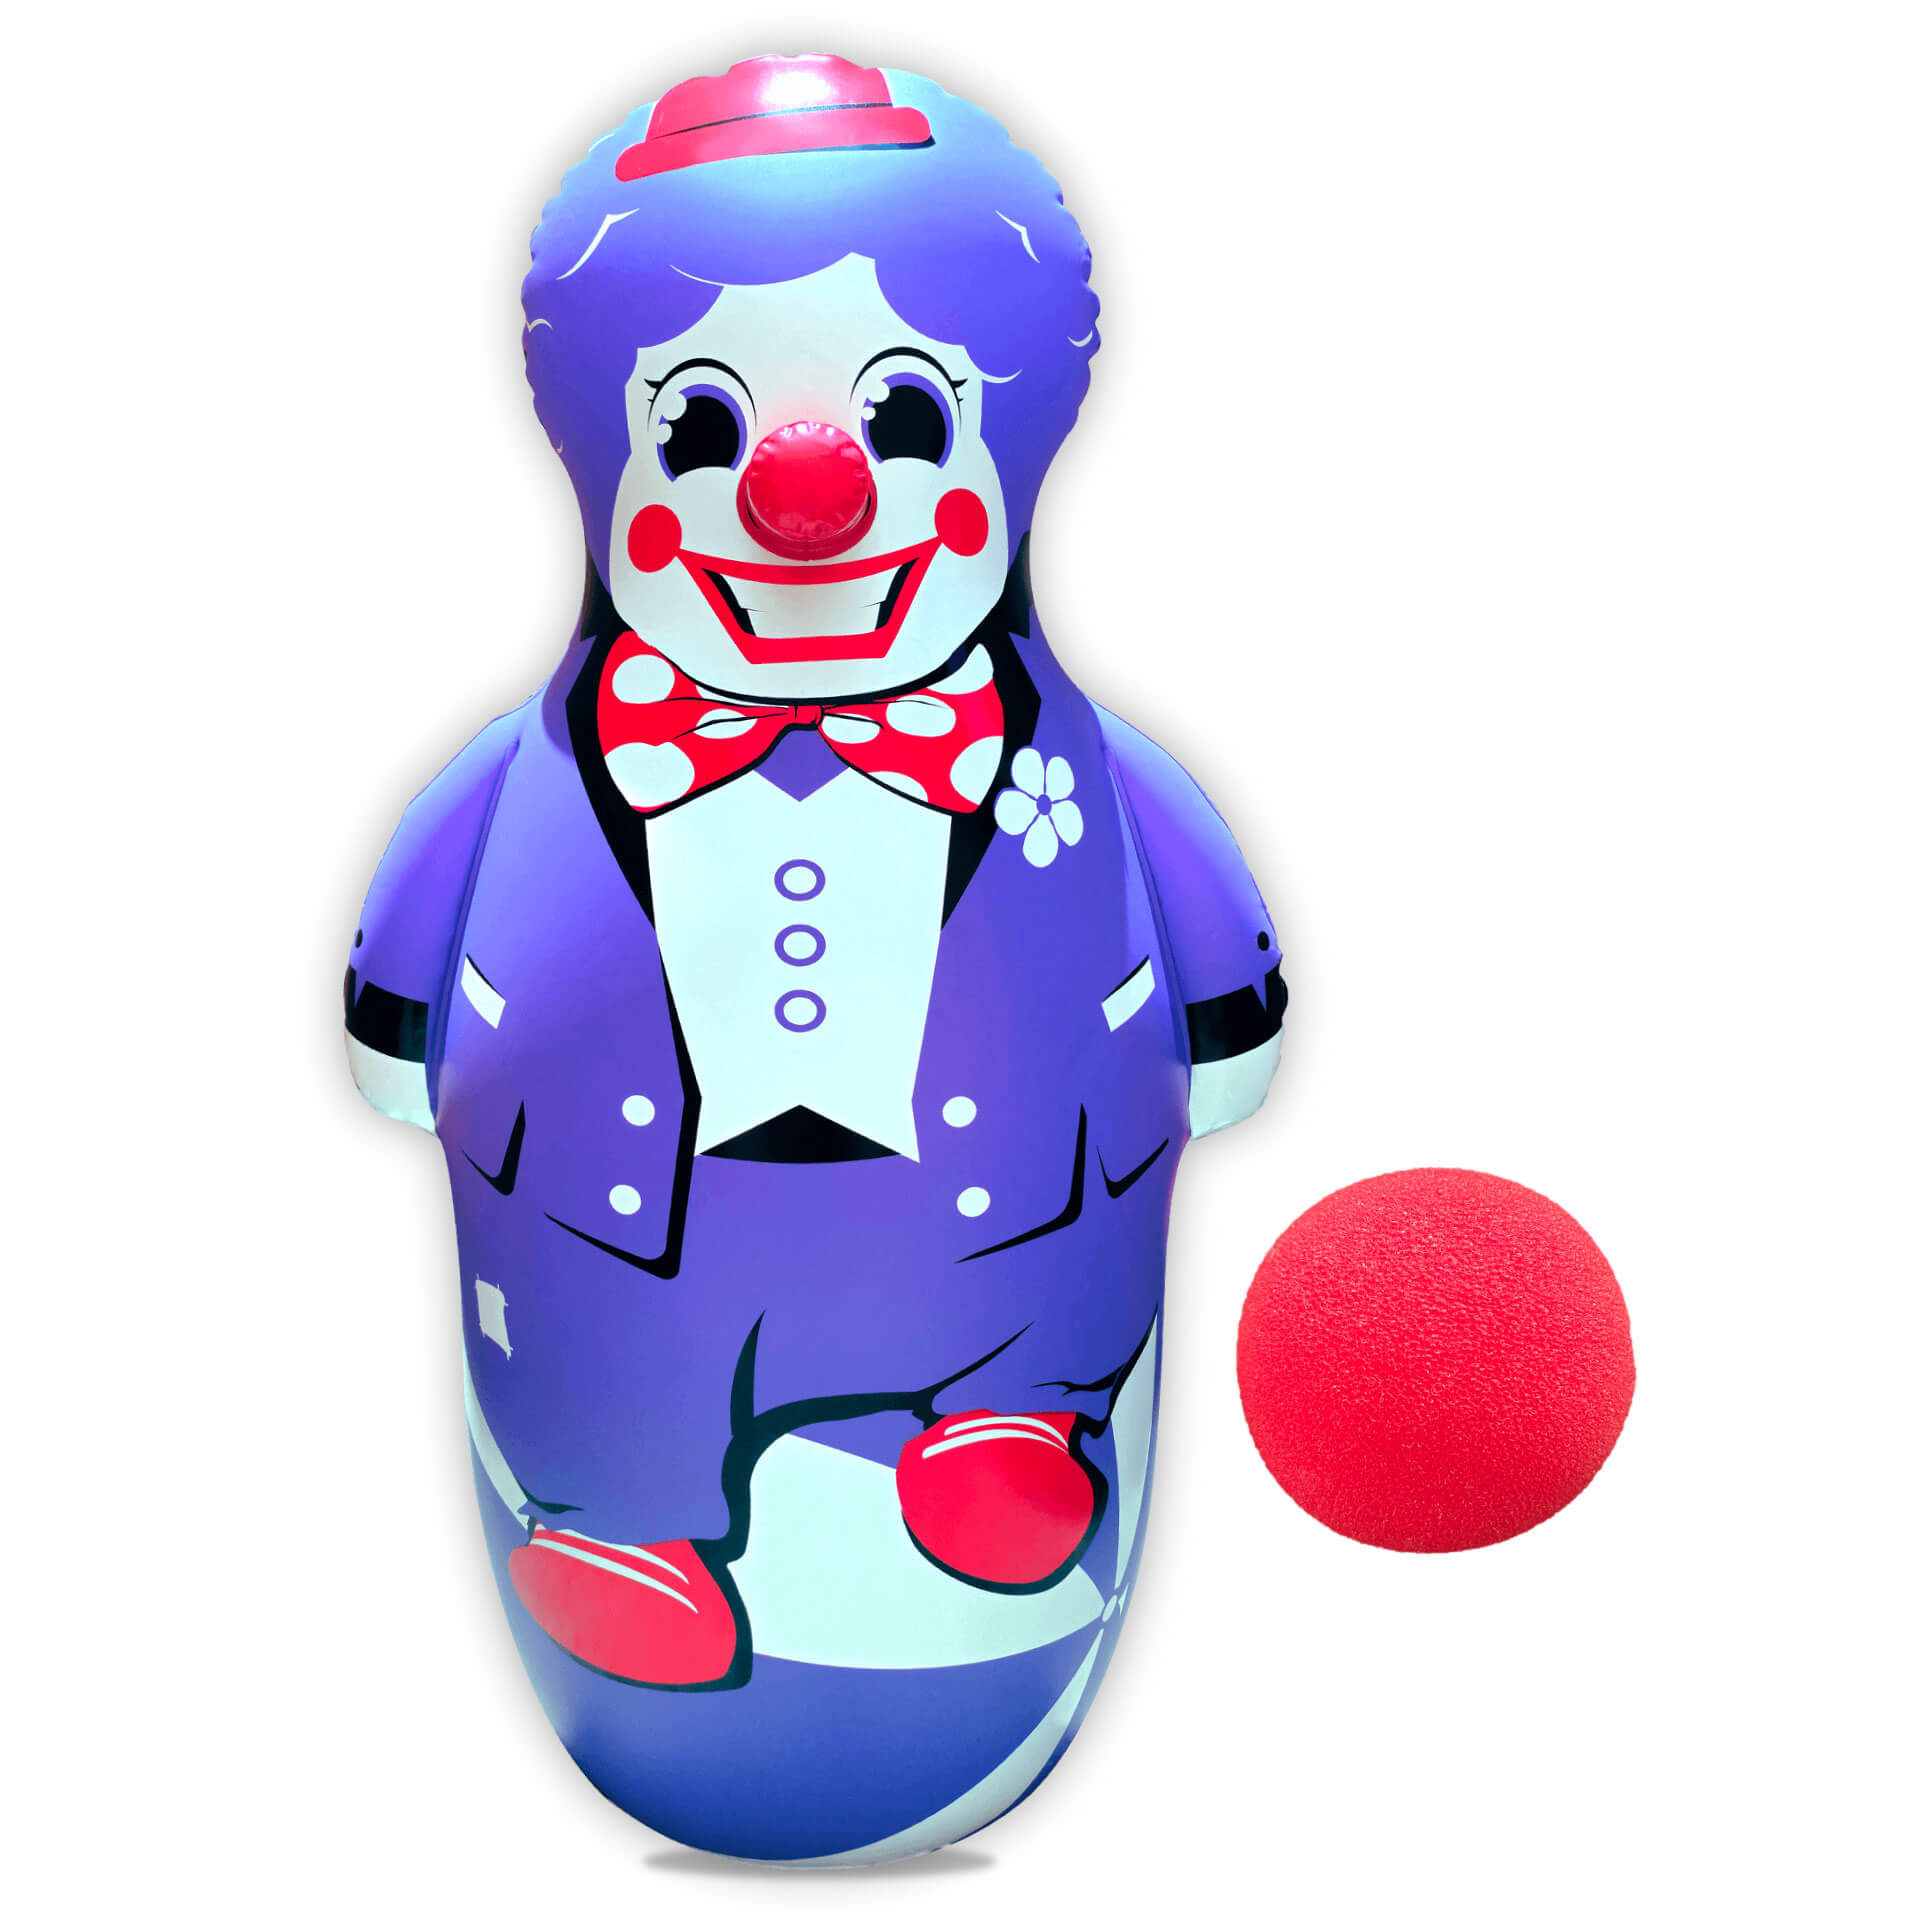 PERI the Clown | 47 Inches <br> Kids Punching Bag | Bop Bag